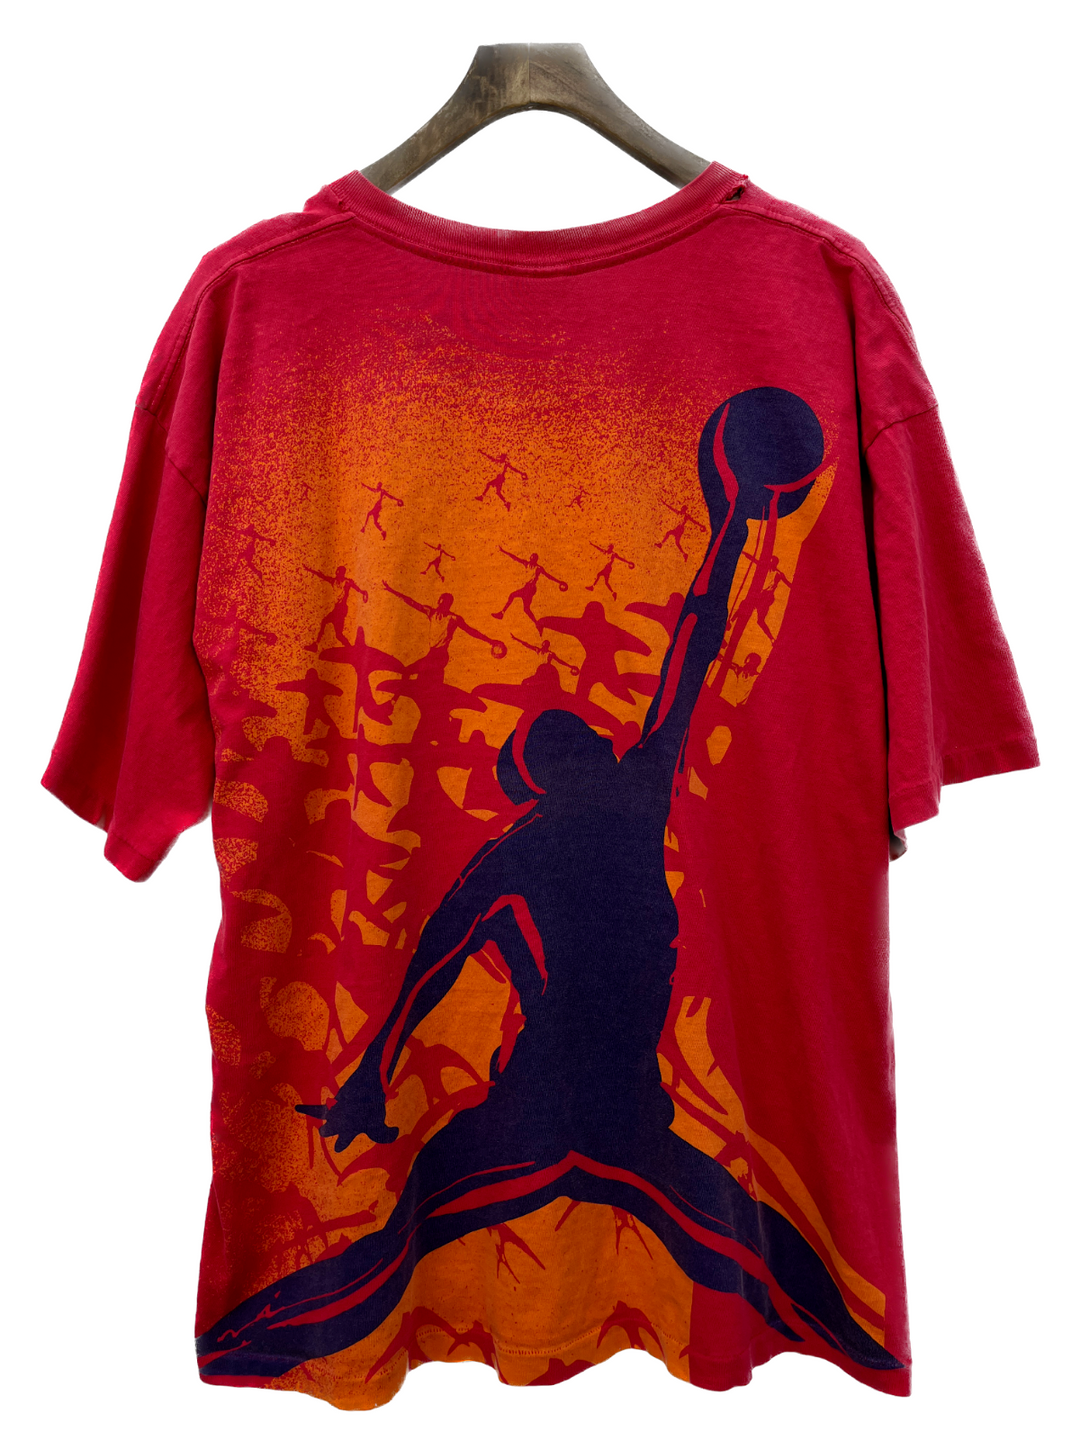 Nike Jordan Jumpman Logo Vintage Graphic T-shirt Size L Red Single Stitch 90s